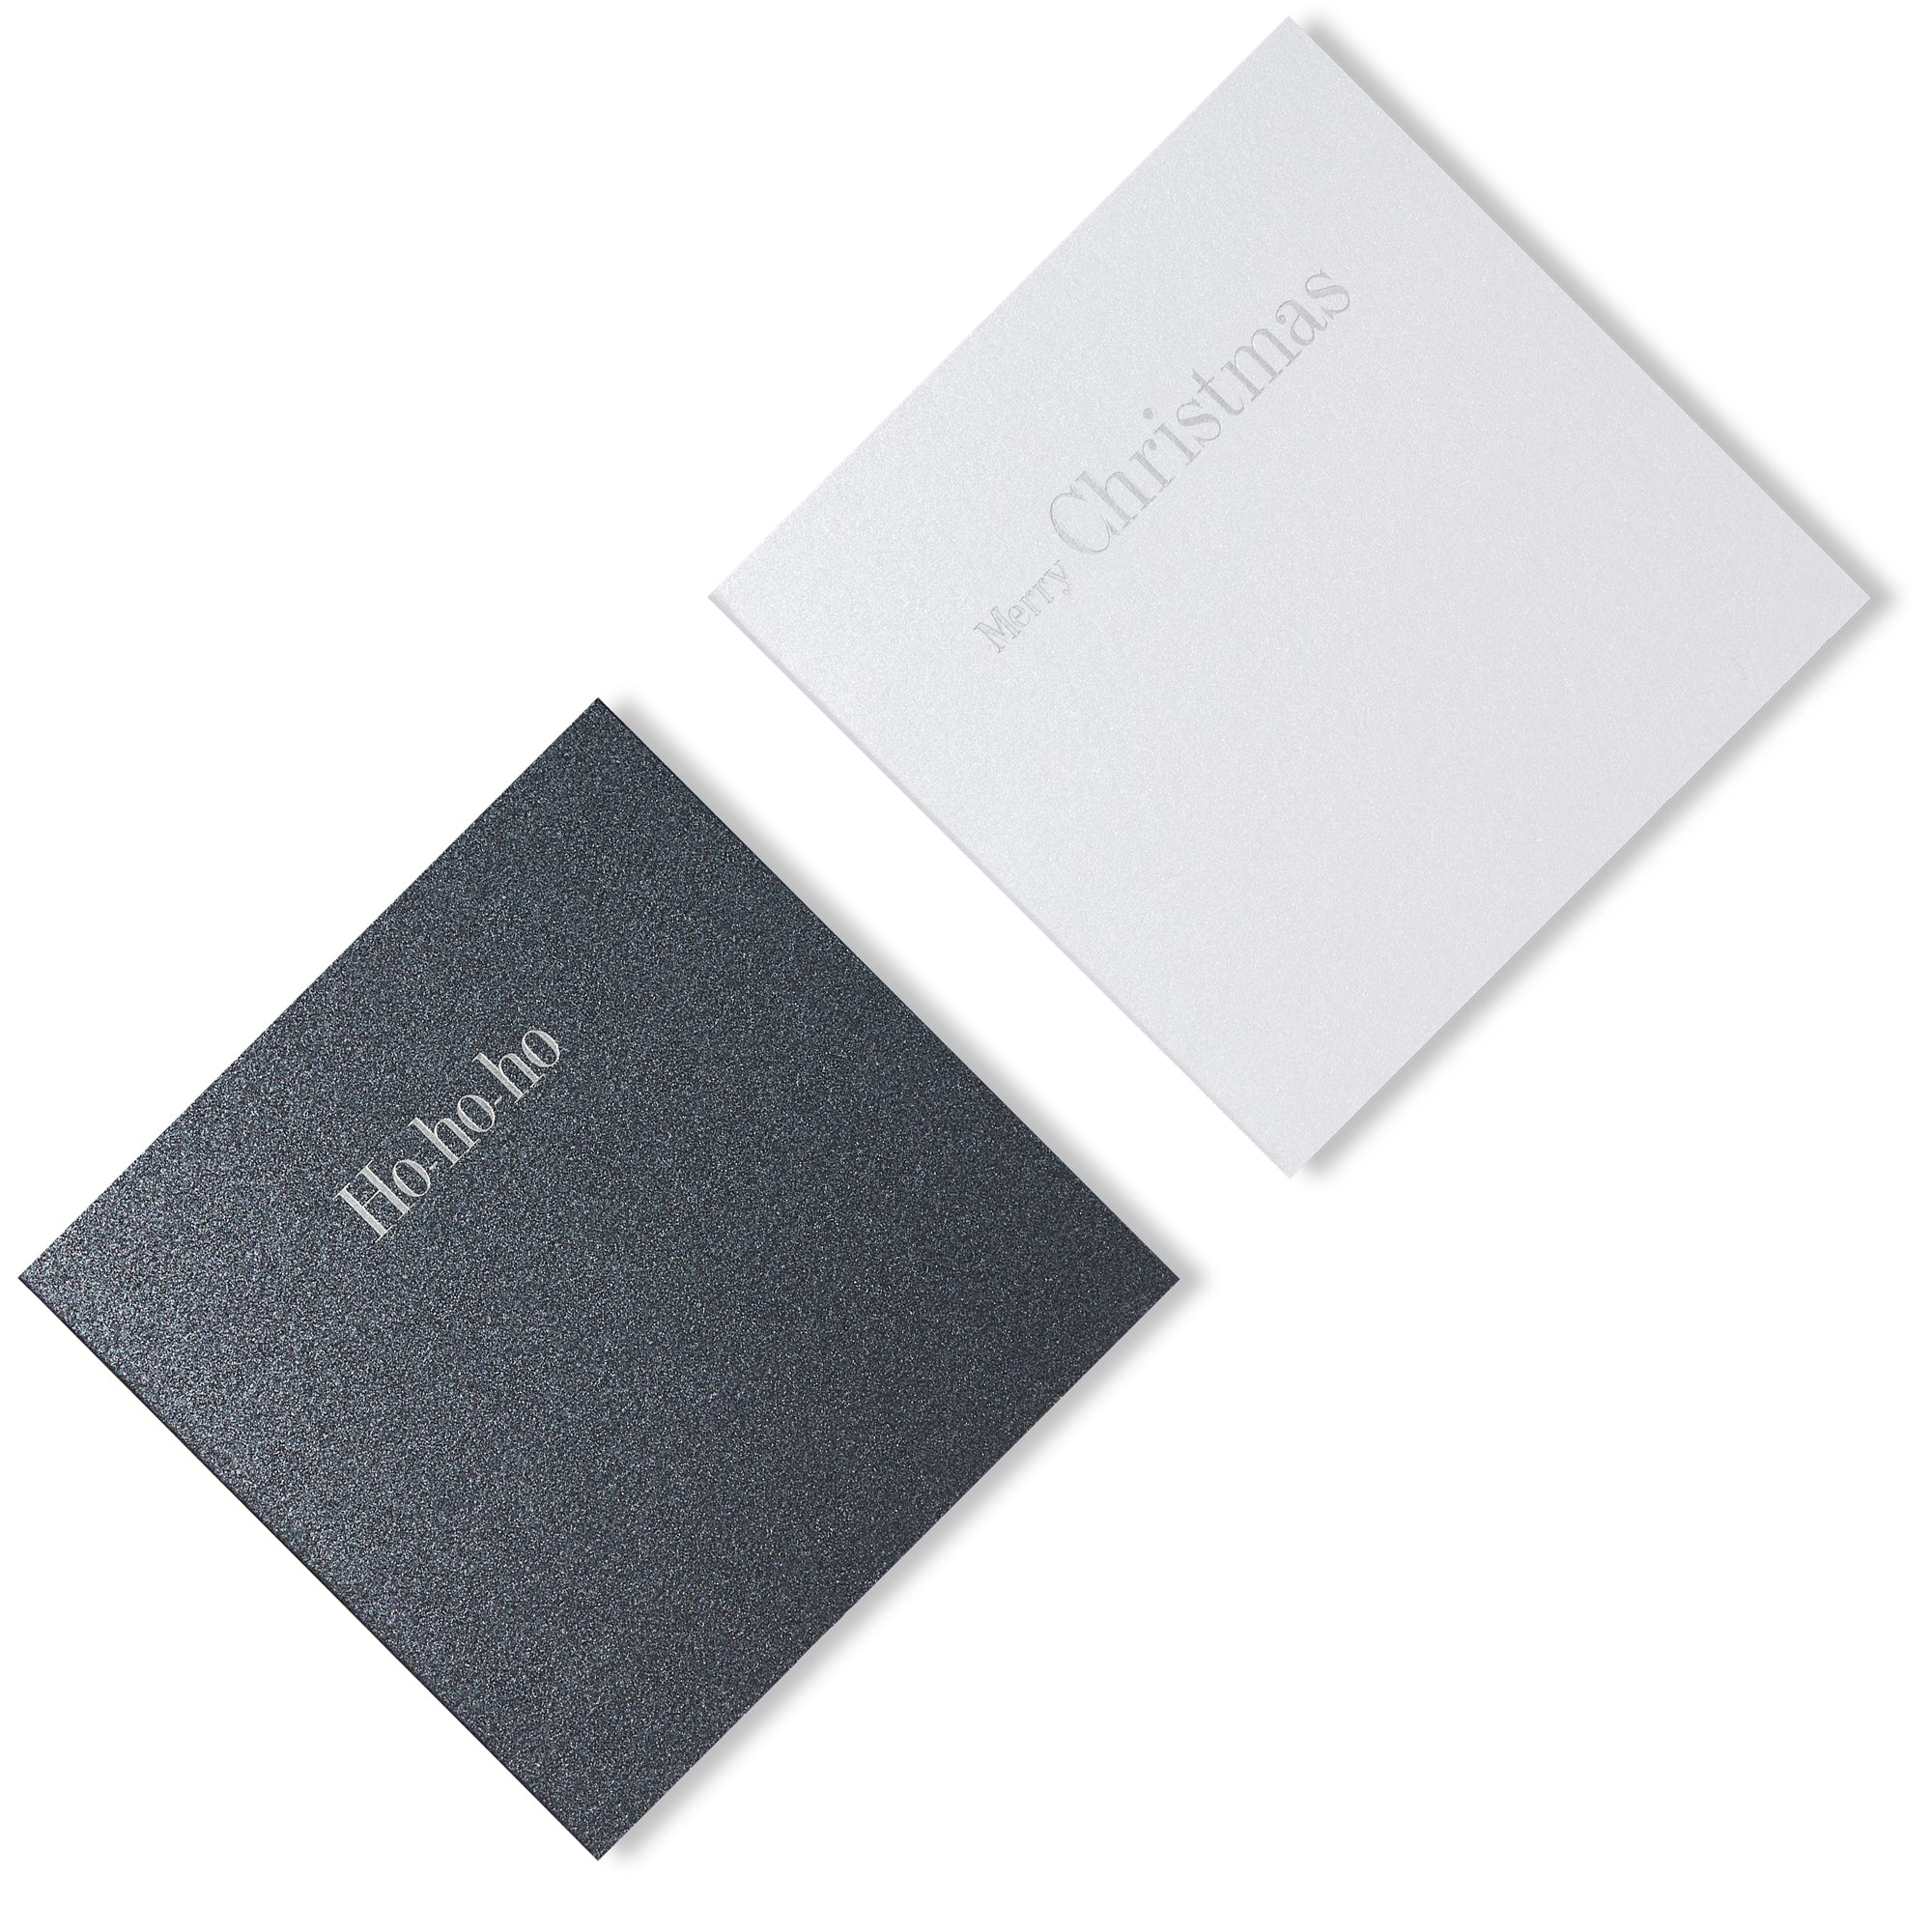 Silver Metallics Foiled Duo Mini Cards, Set of 8